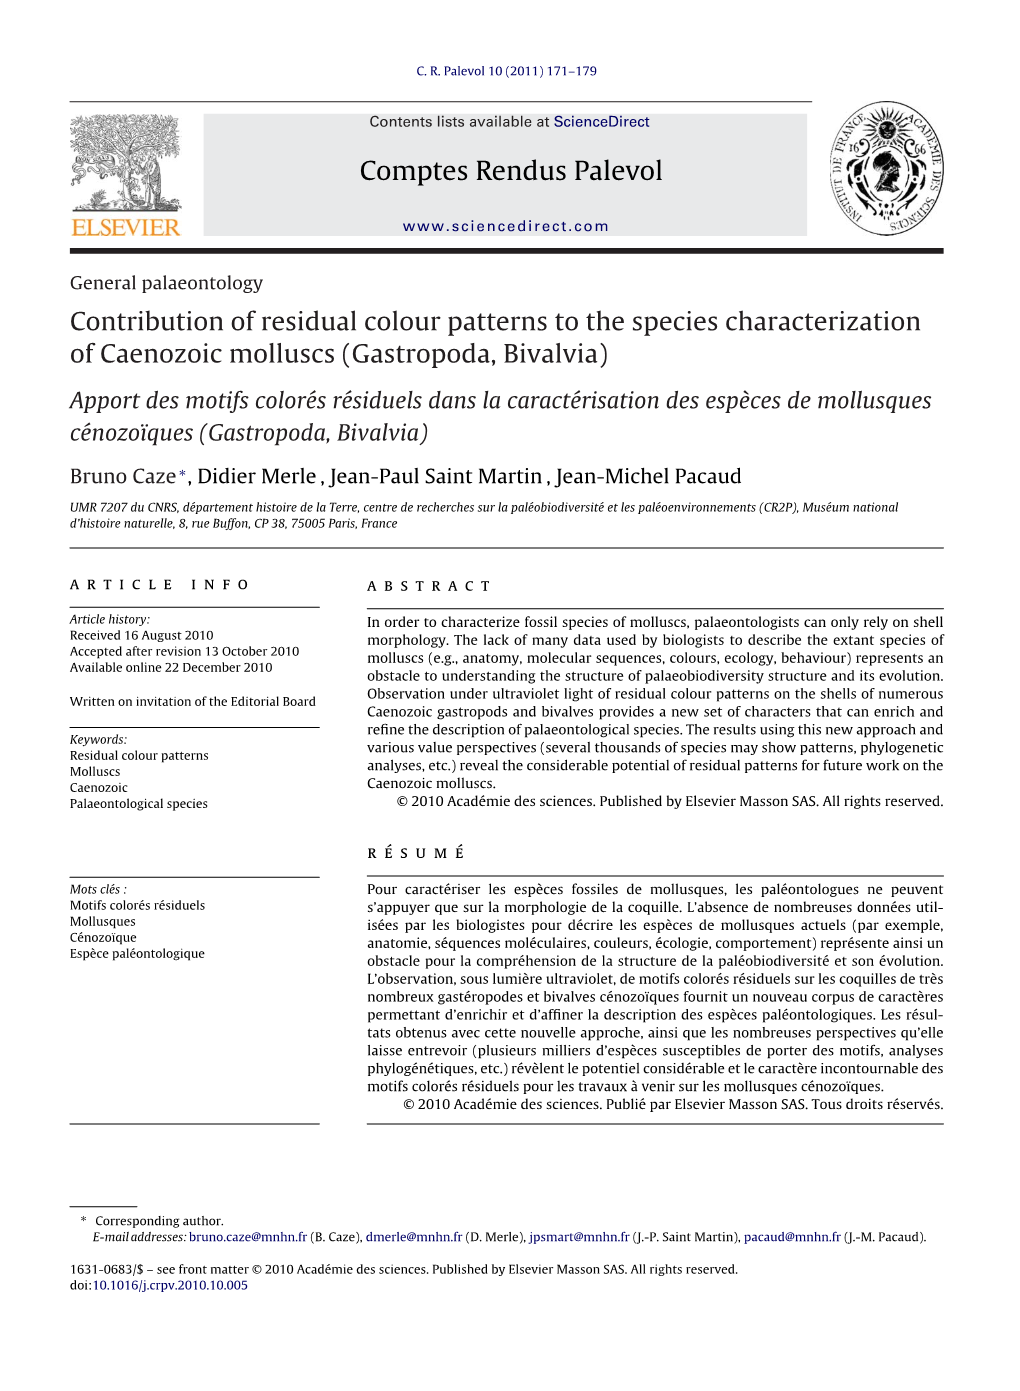 Contribution of Residual Colour Patterns to the Species Characterization of Caenozoic Molluscs (Gastropoda, Bivalvia)